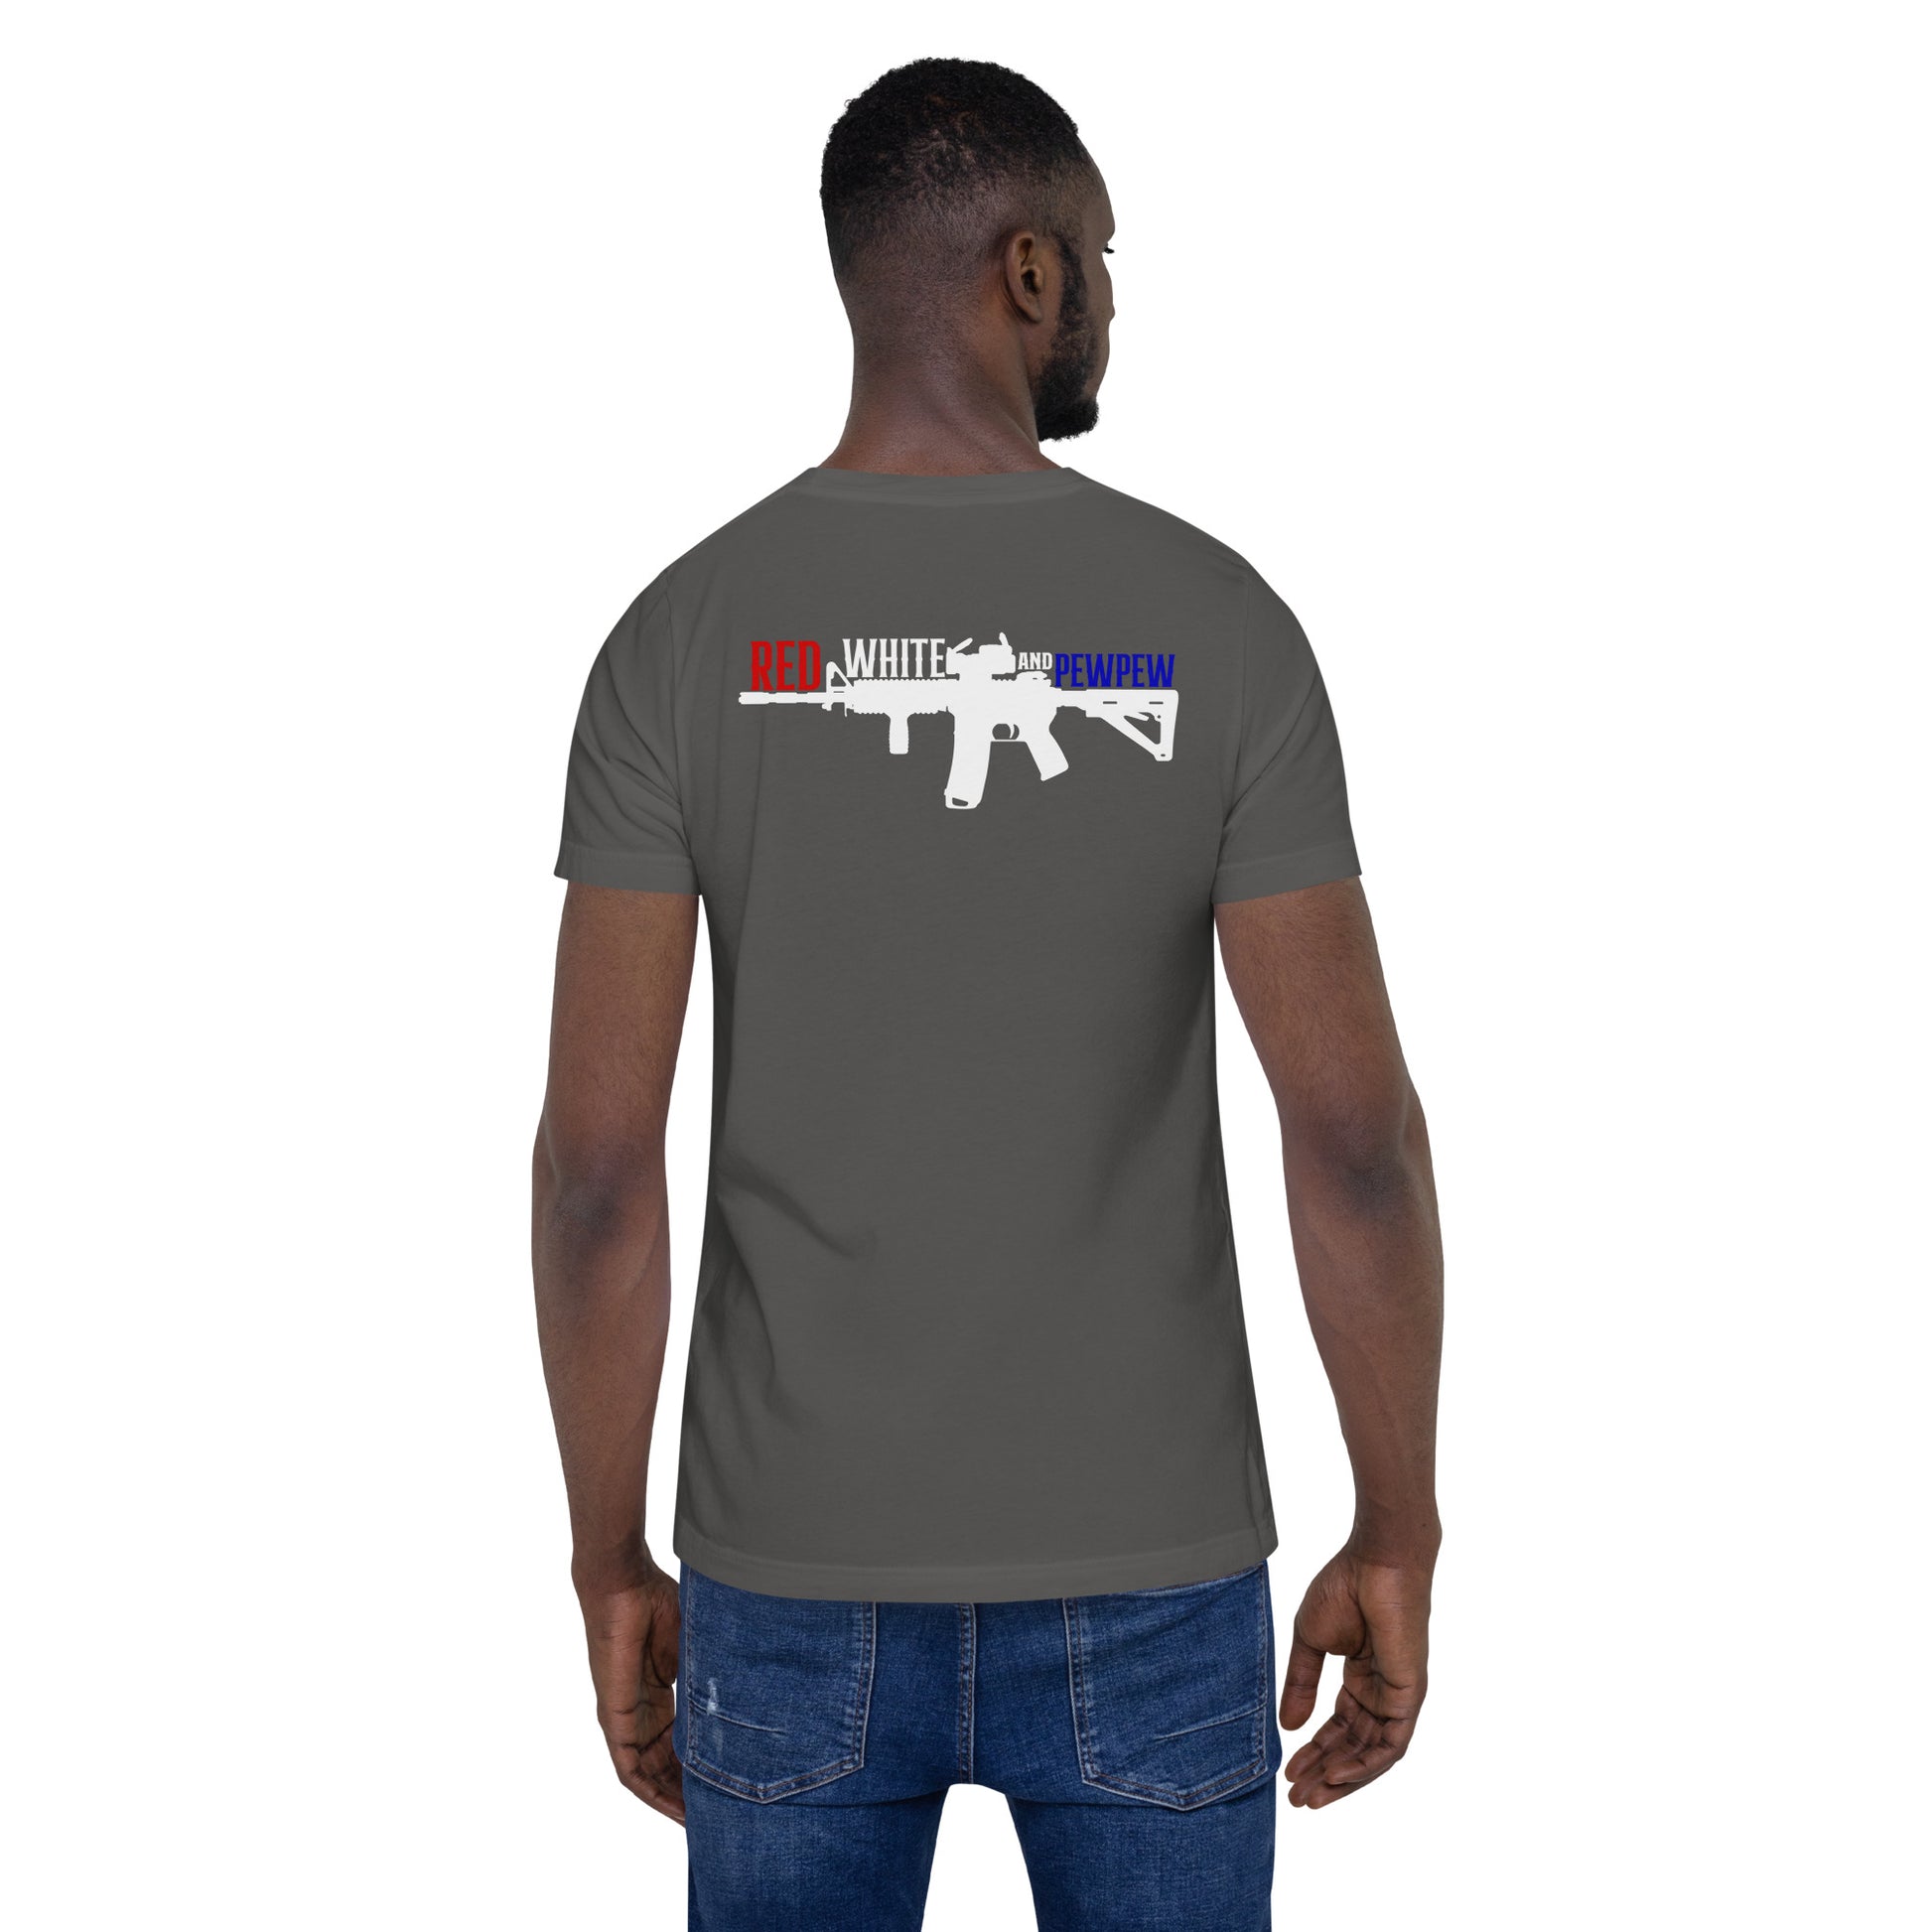 Red, White and Pew Pew 2nd Amendment Premium Tee Shirt-911 Duty Gear USA-911 Duty Gear USA